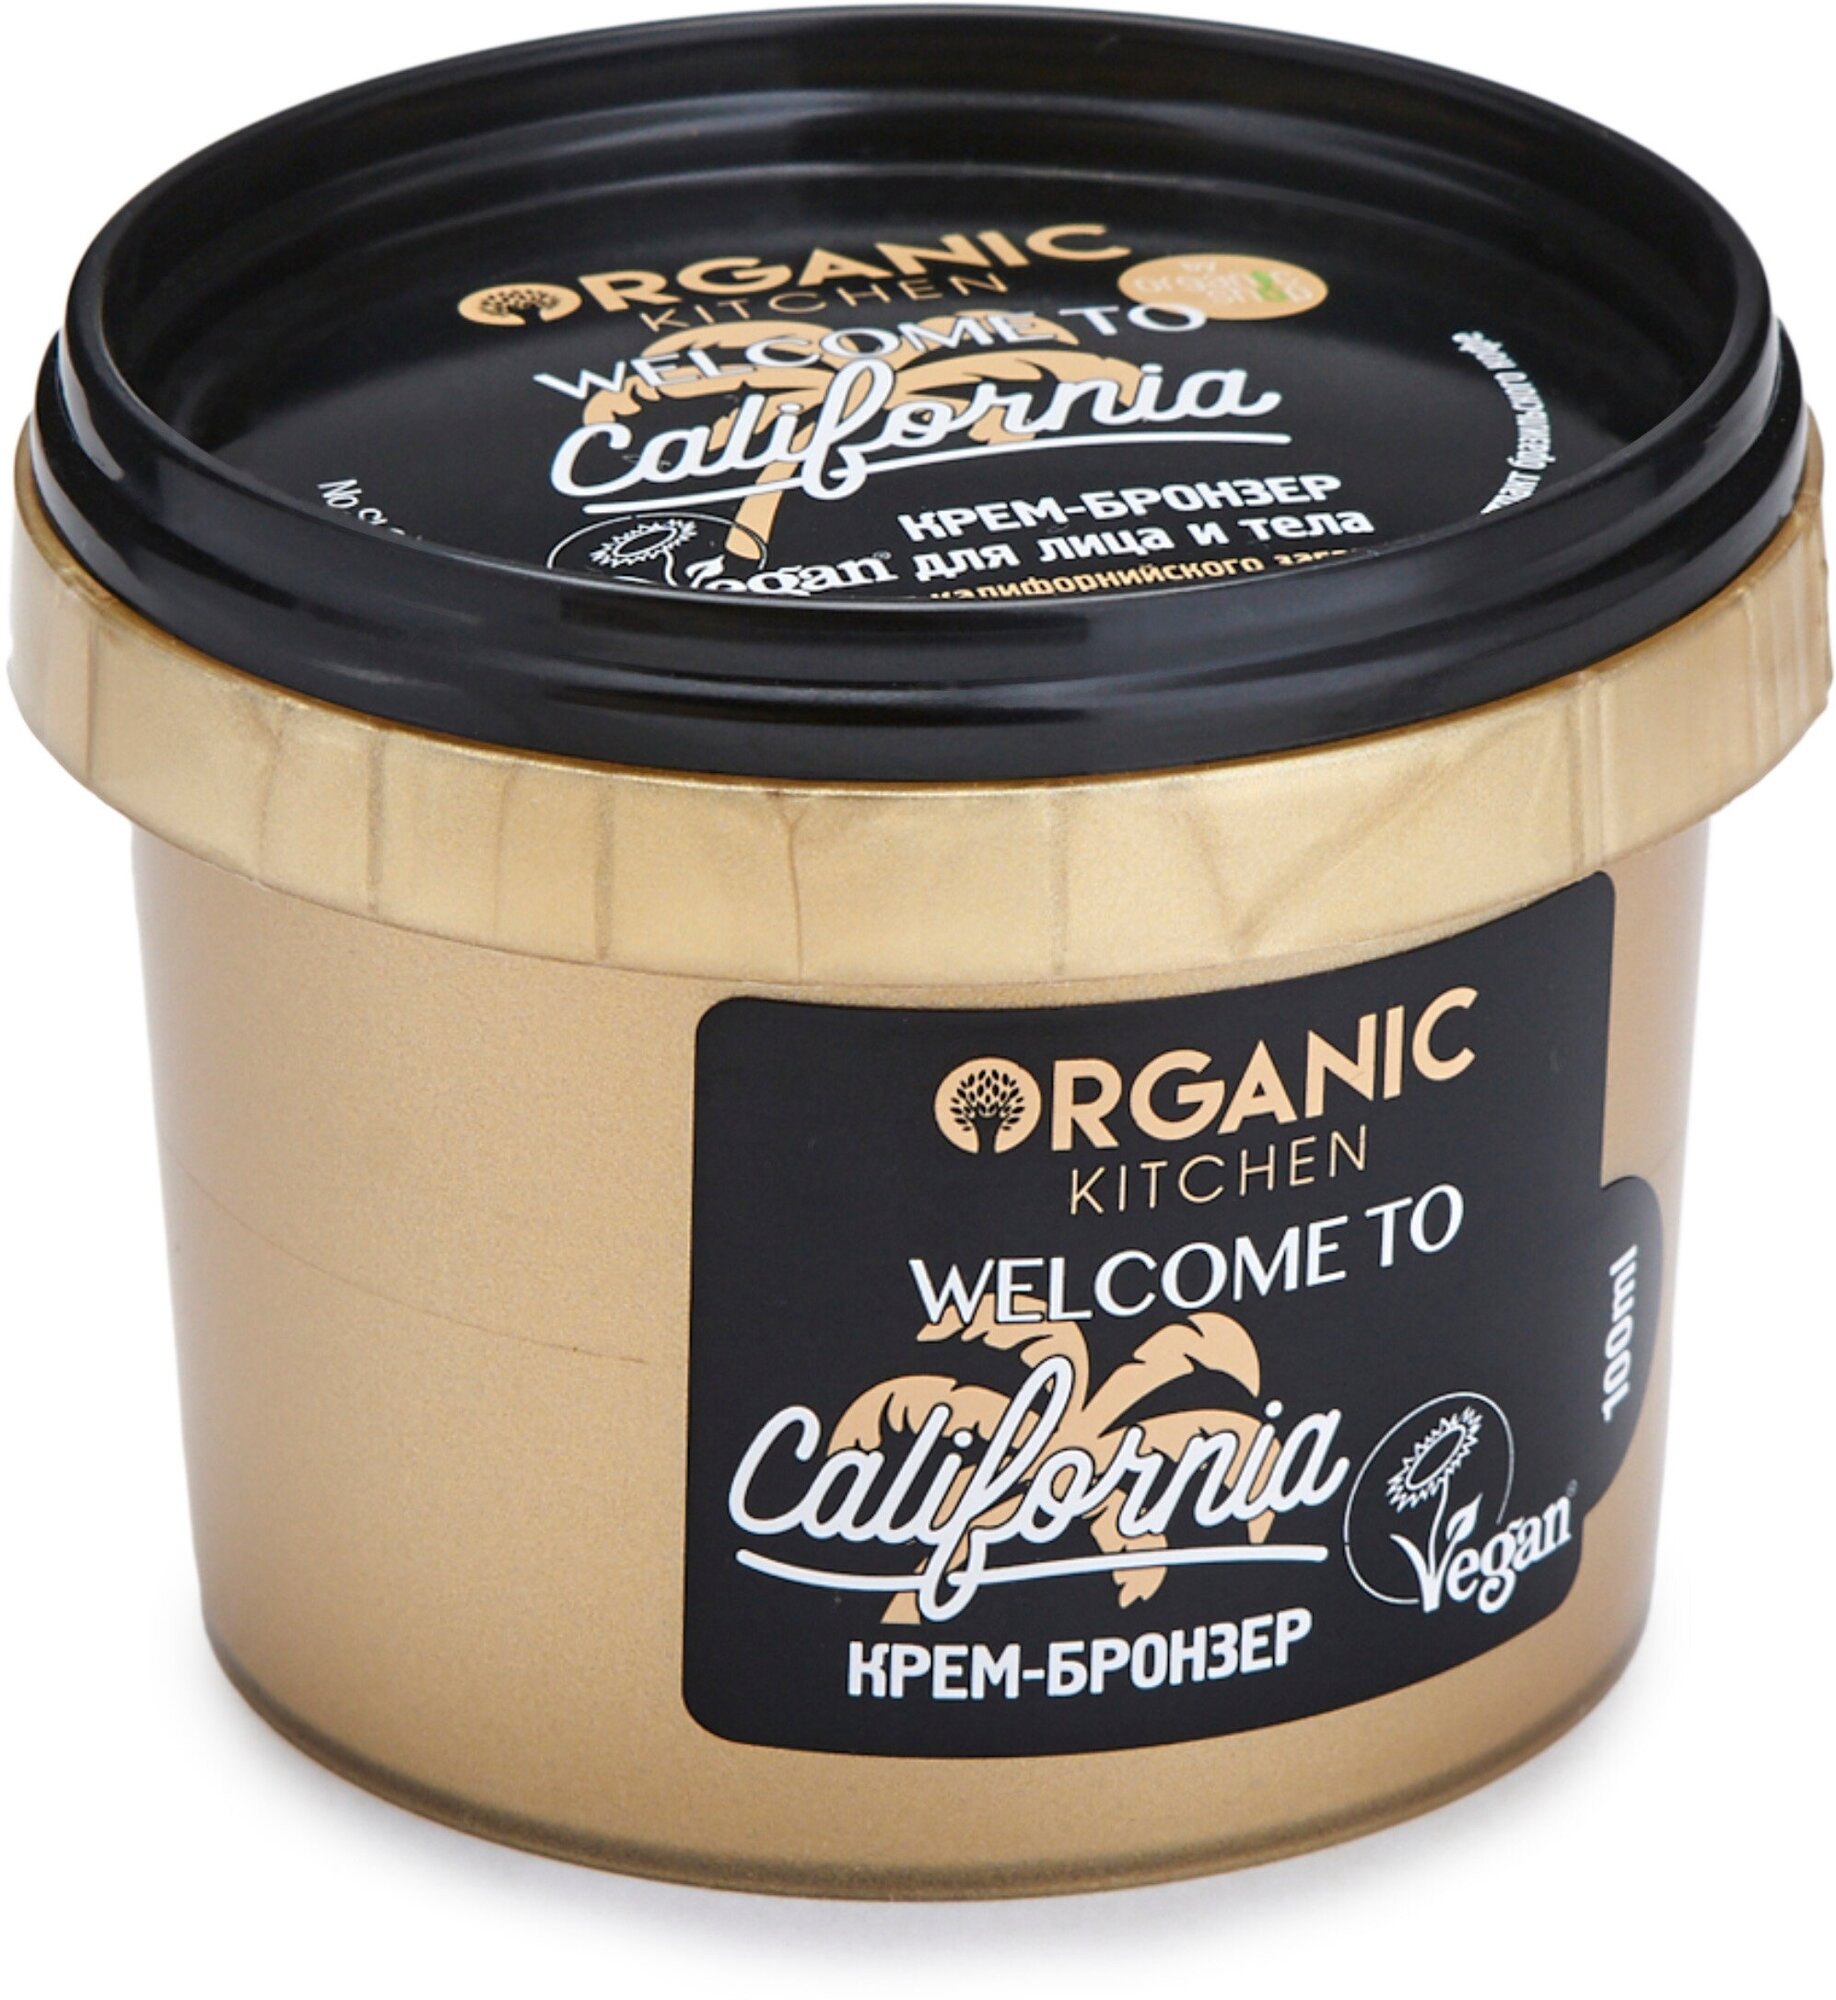 -     "Welcome to California" Organic Kitchen, 100 